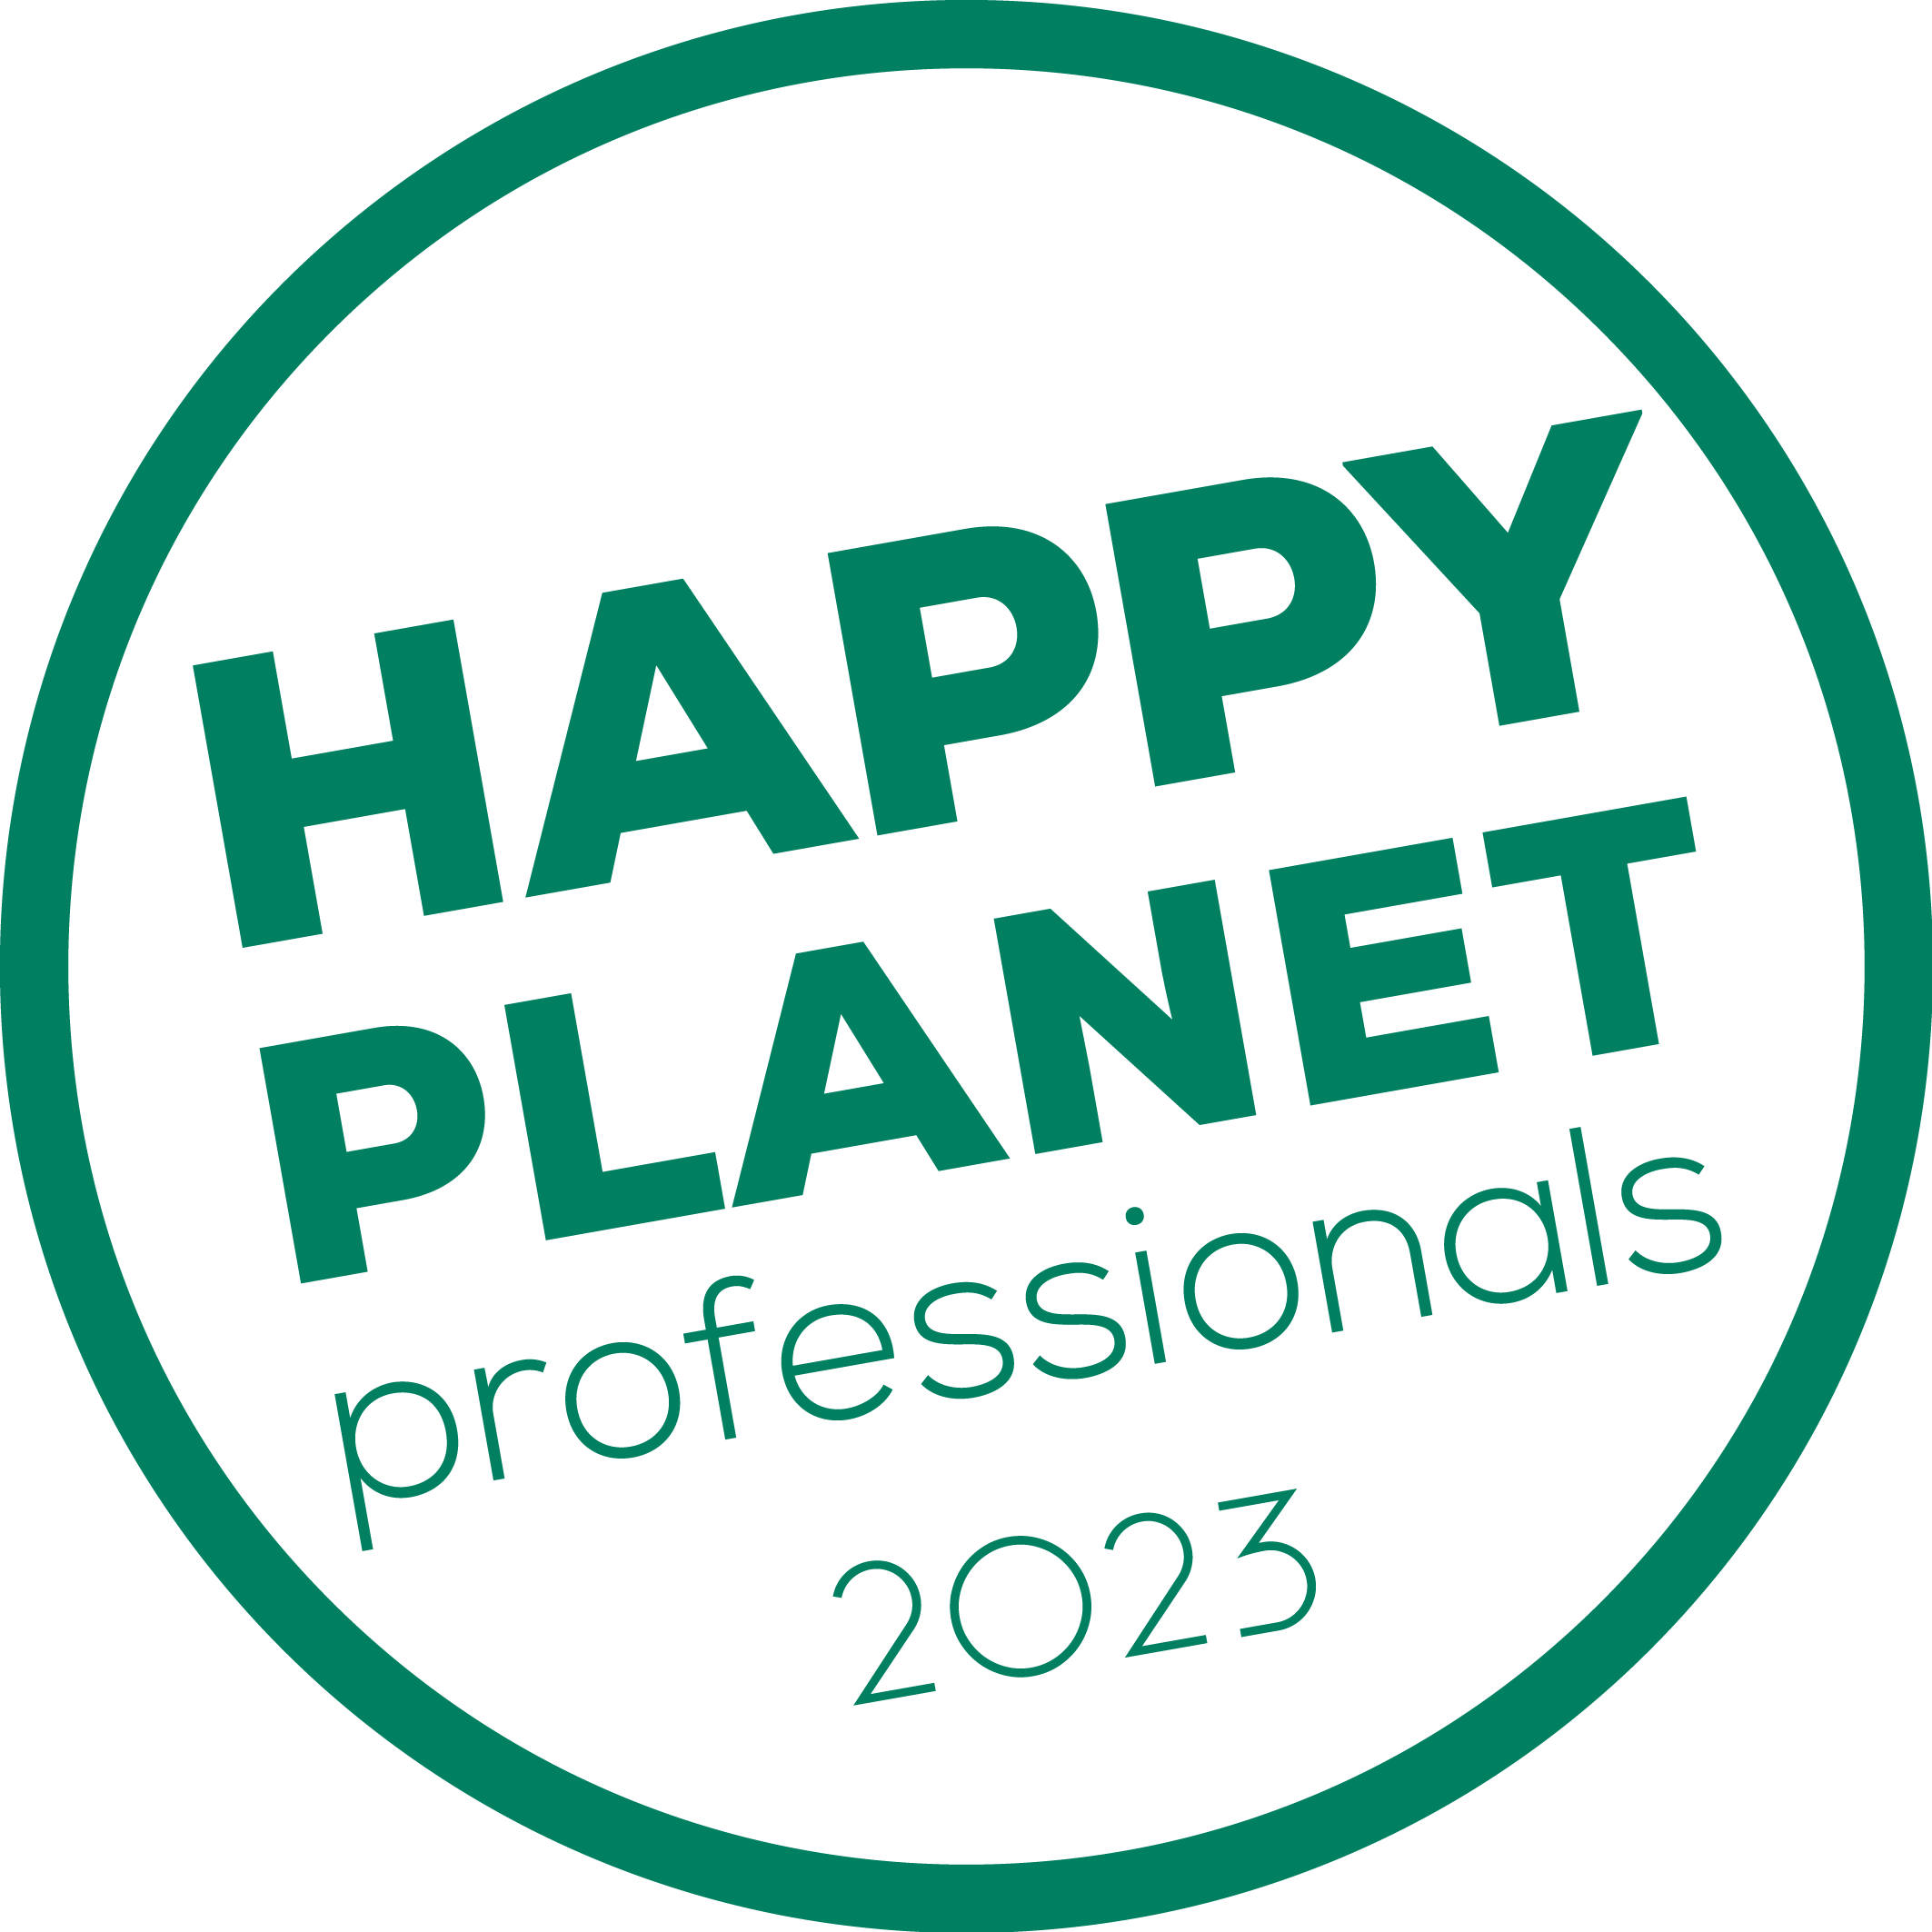 Happy Planet Professional